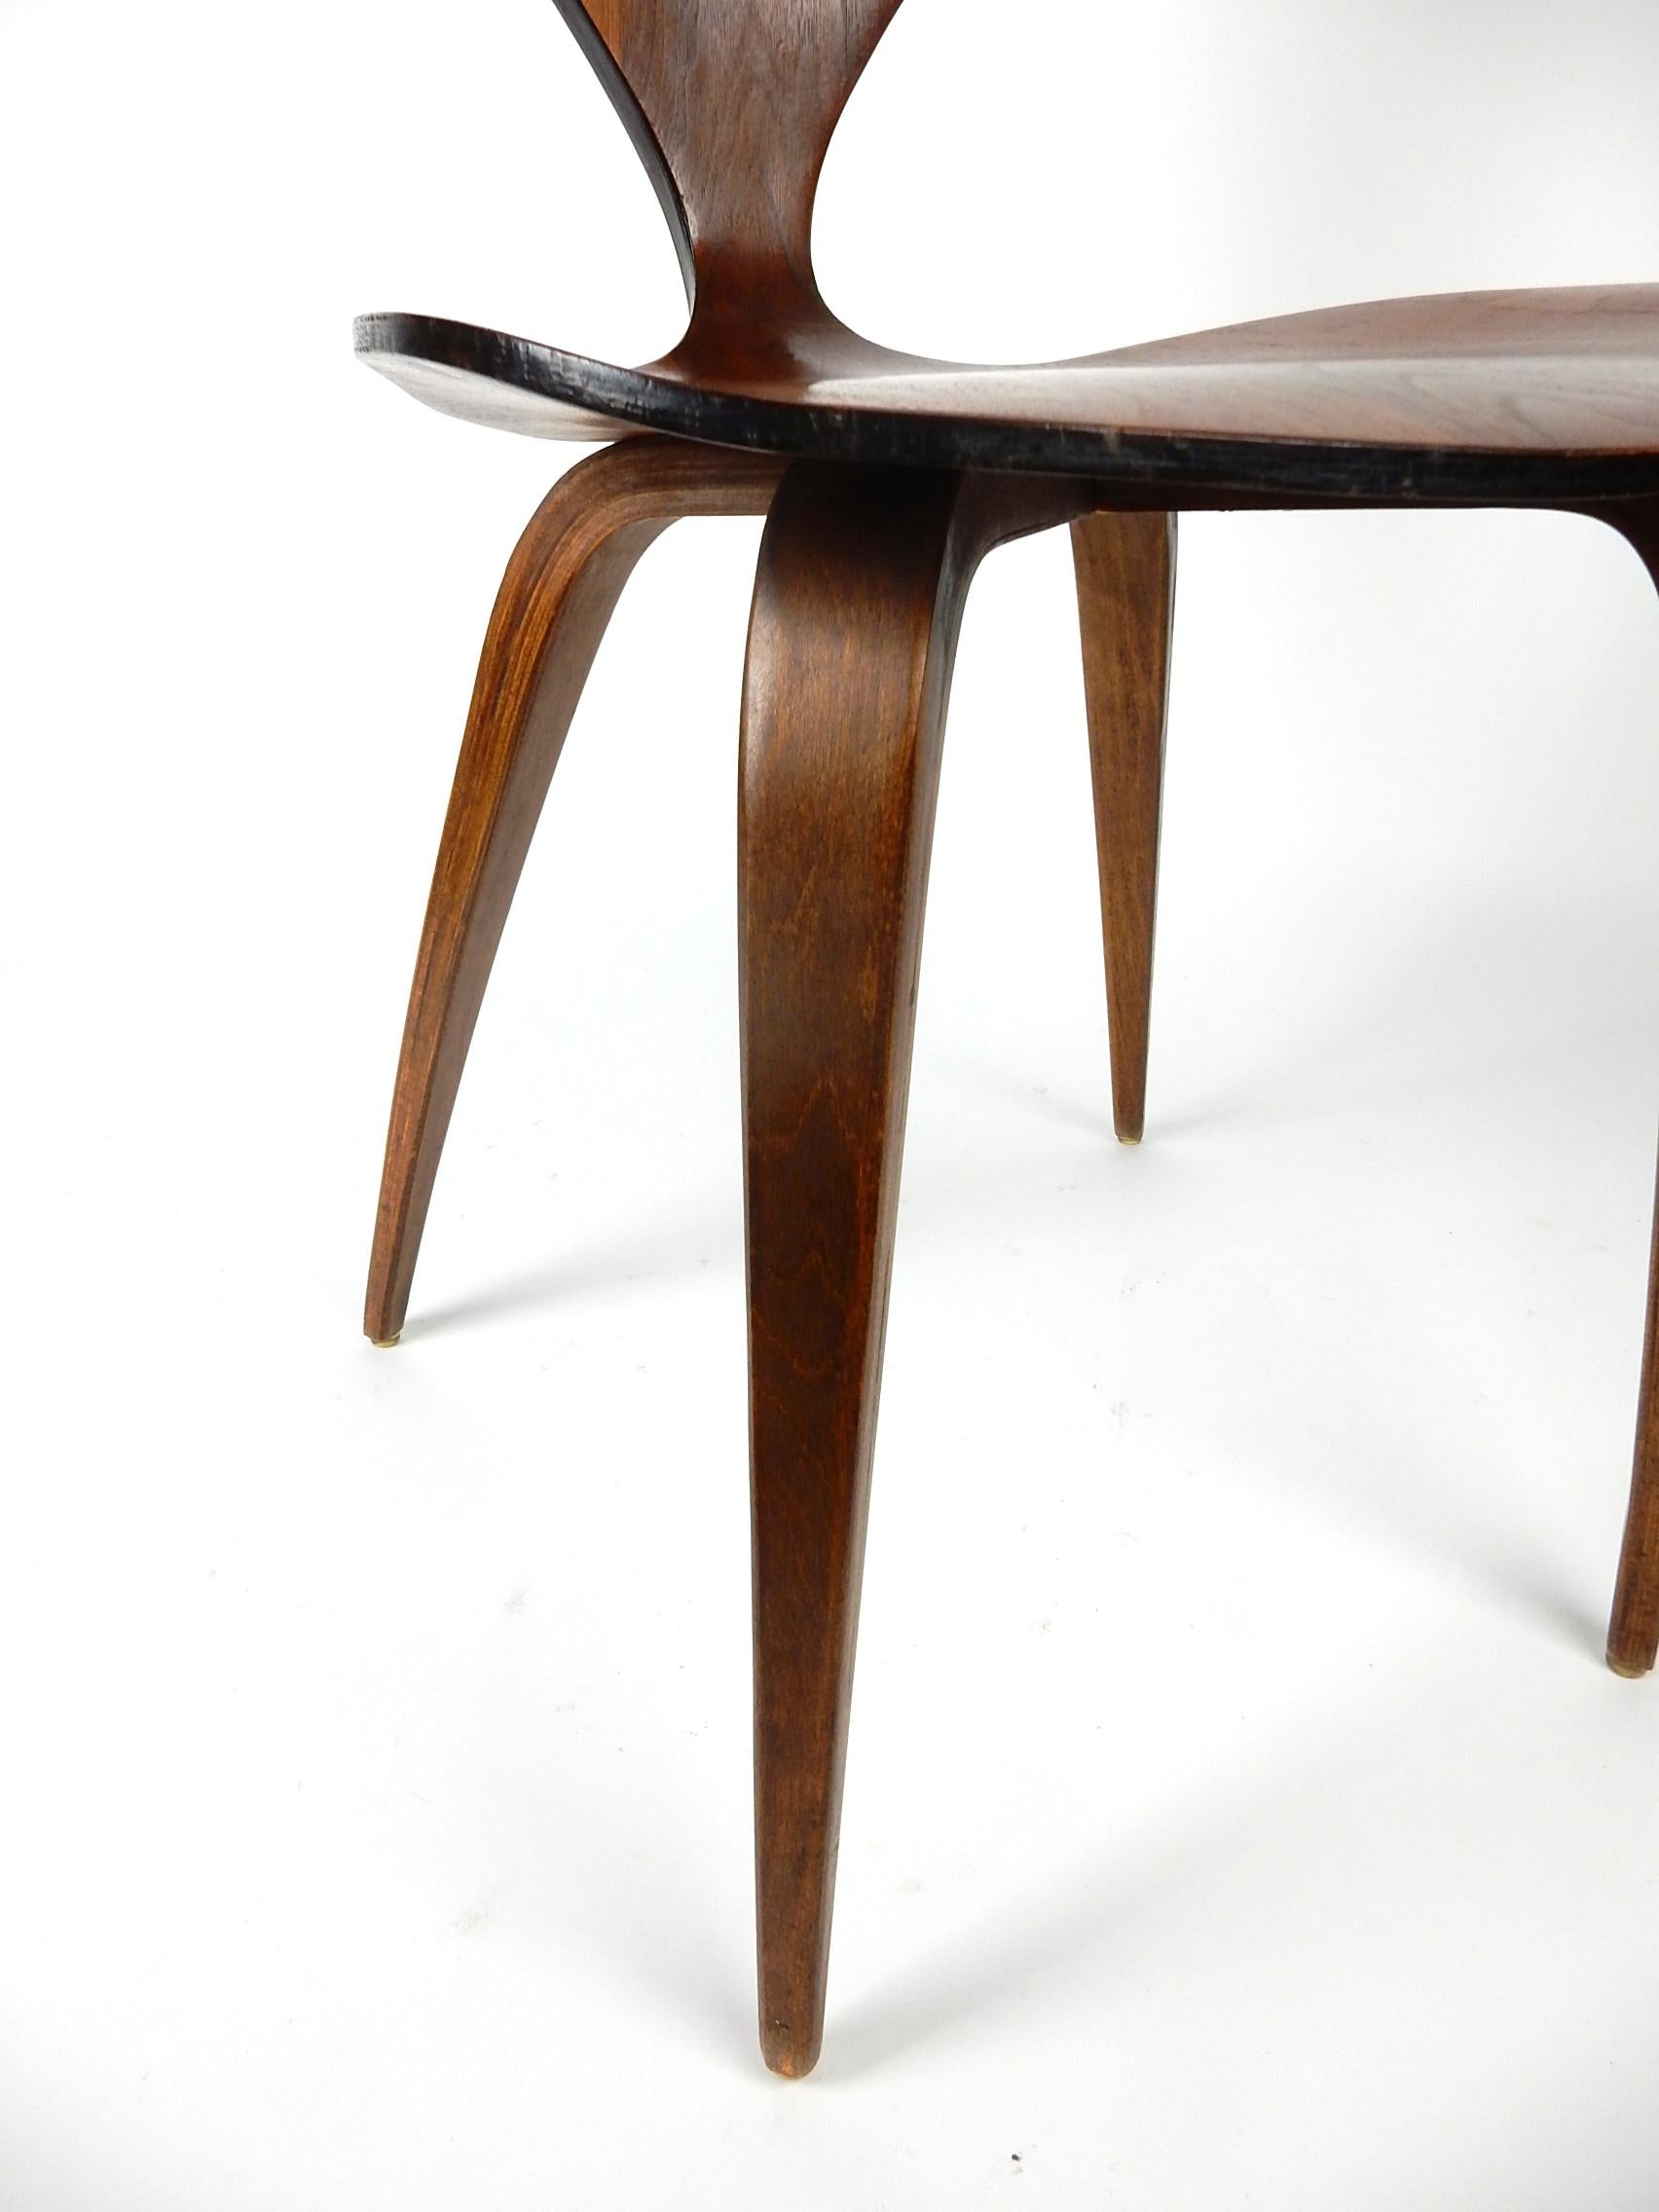 20th Century Mid-Century Modern Chair Norman Cherner Design for Plycraft